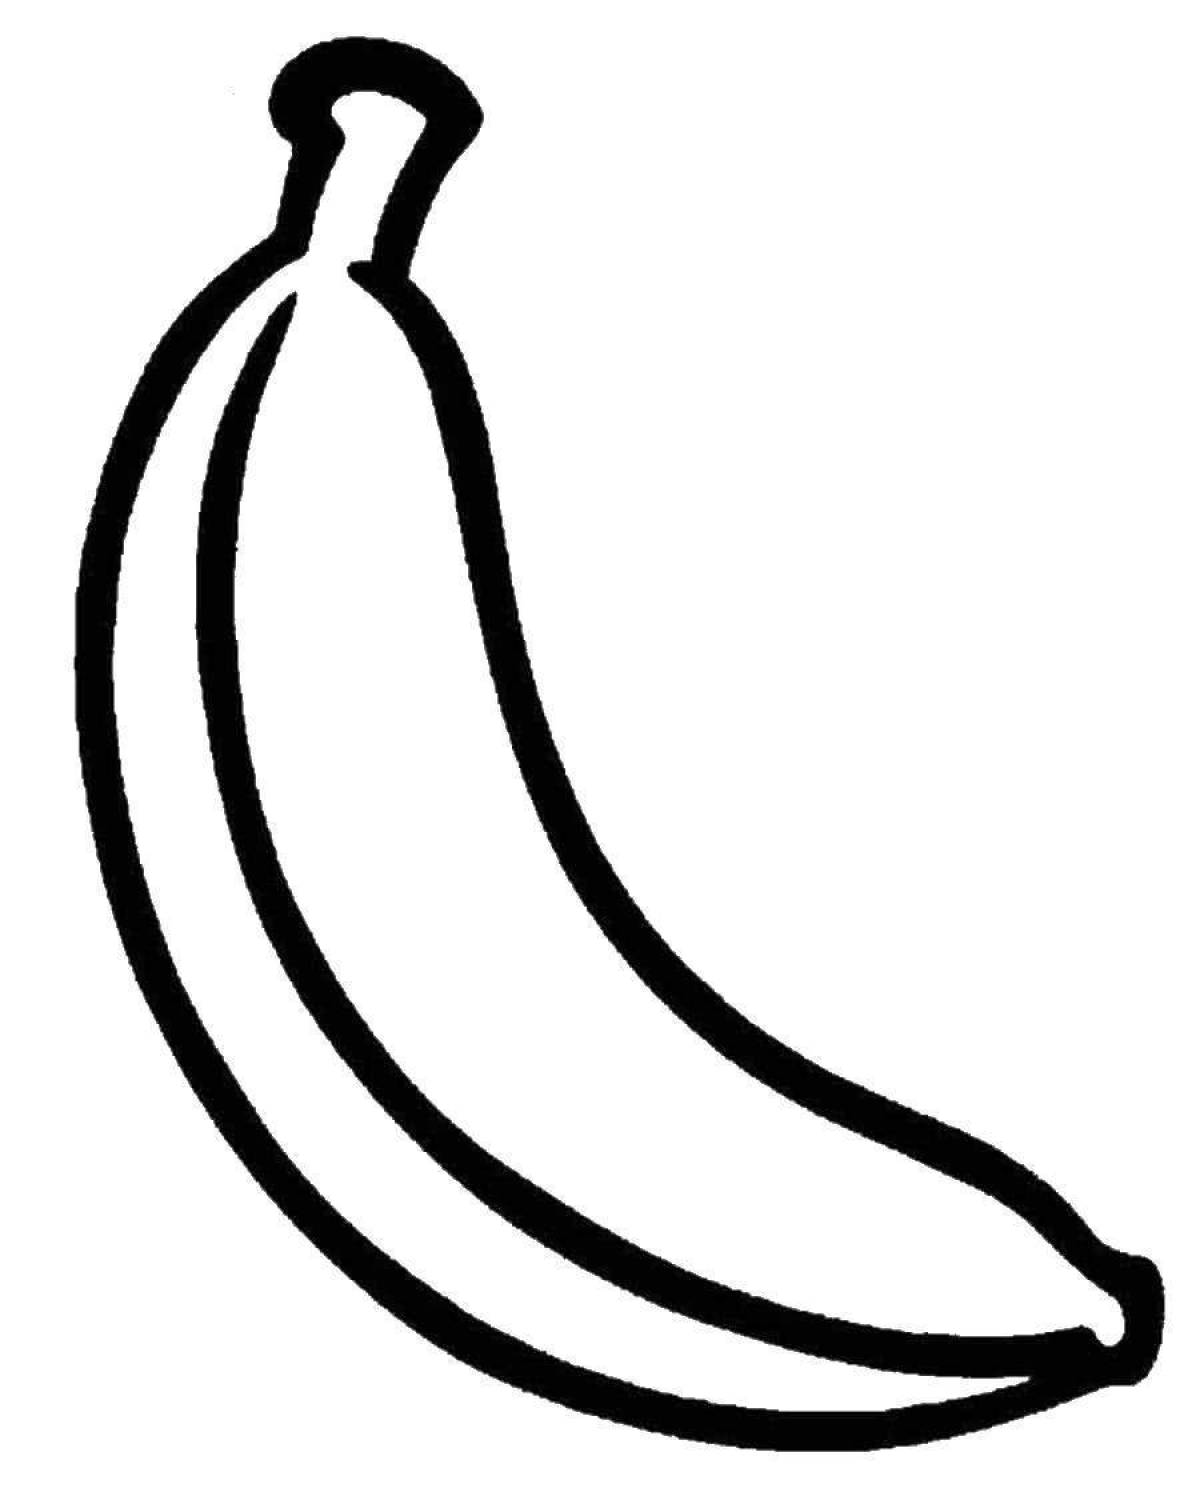 Baby banana #19